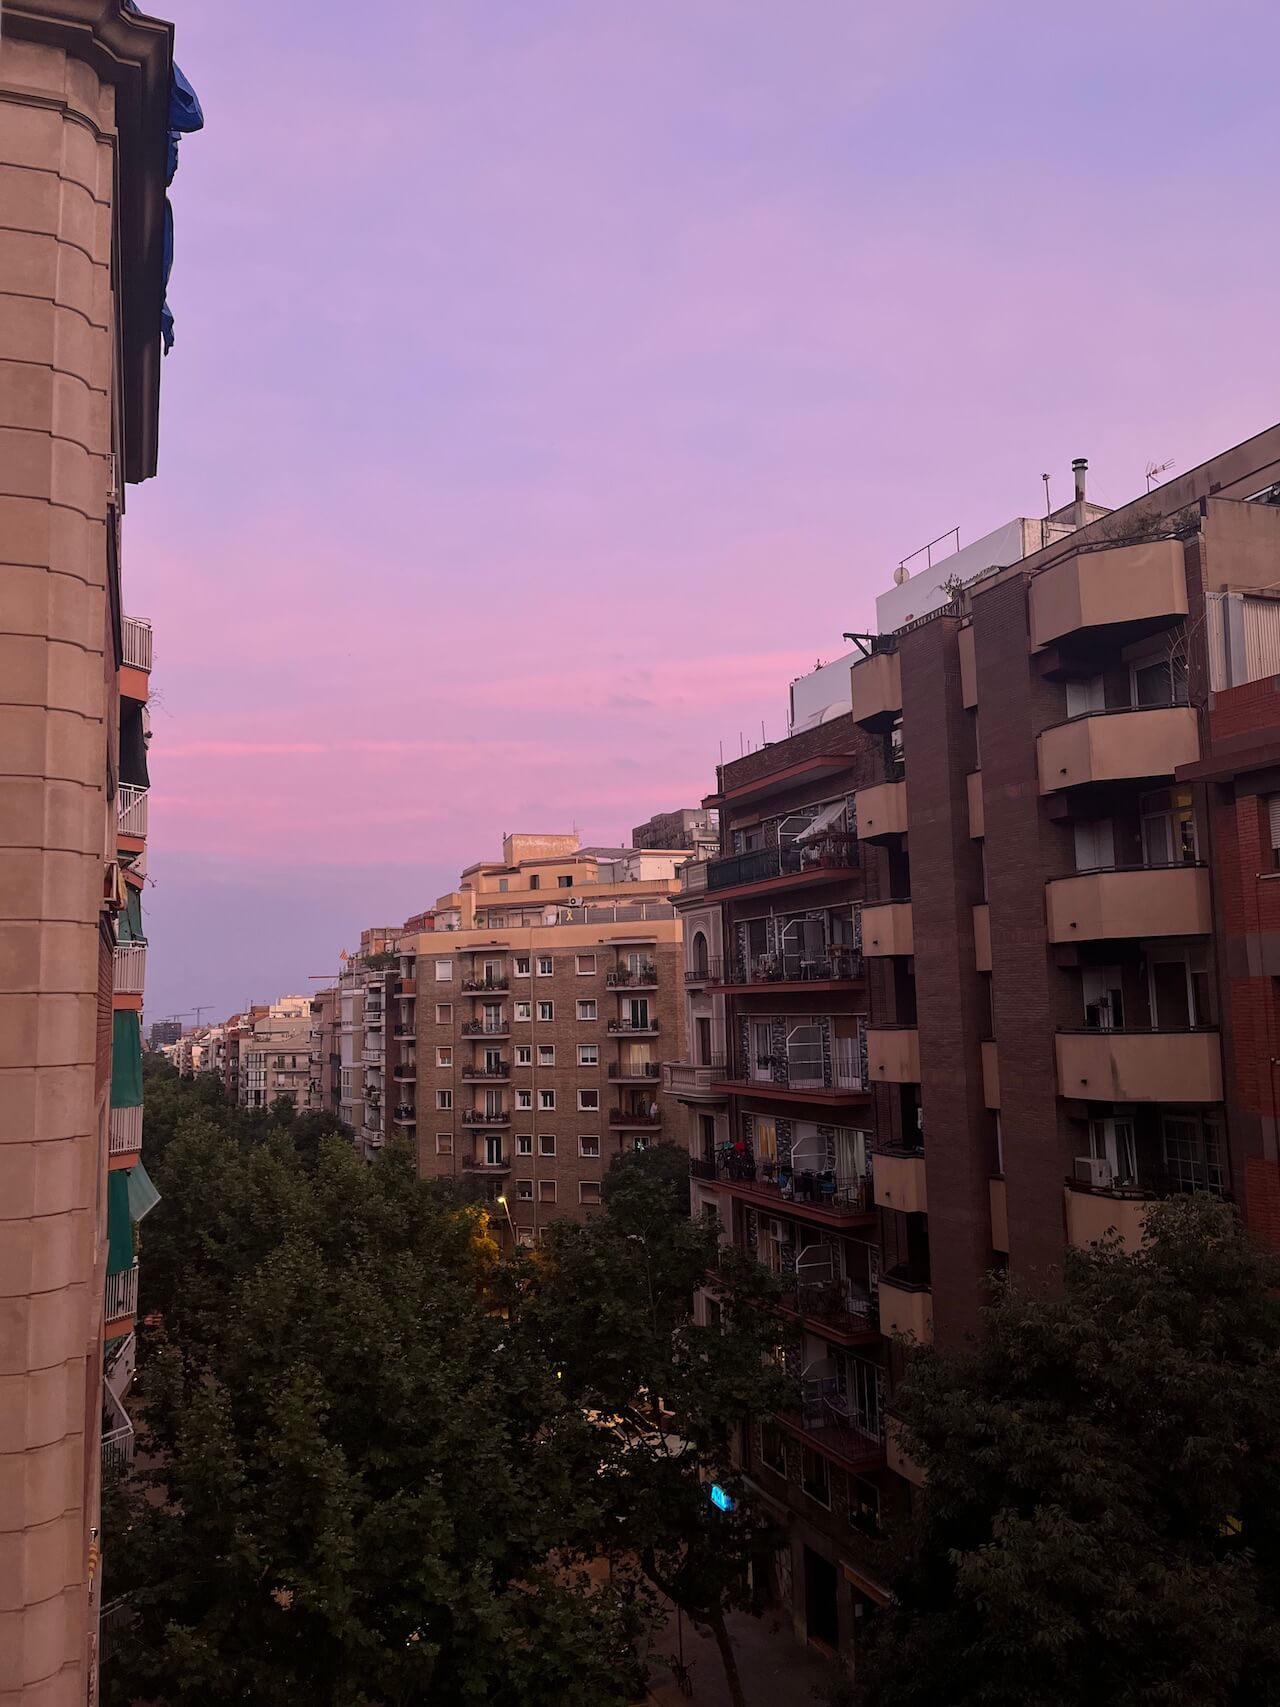 sunset in a Barcelona neighborhood